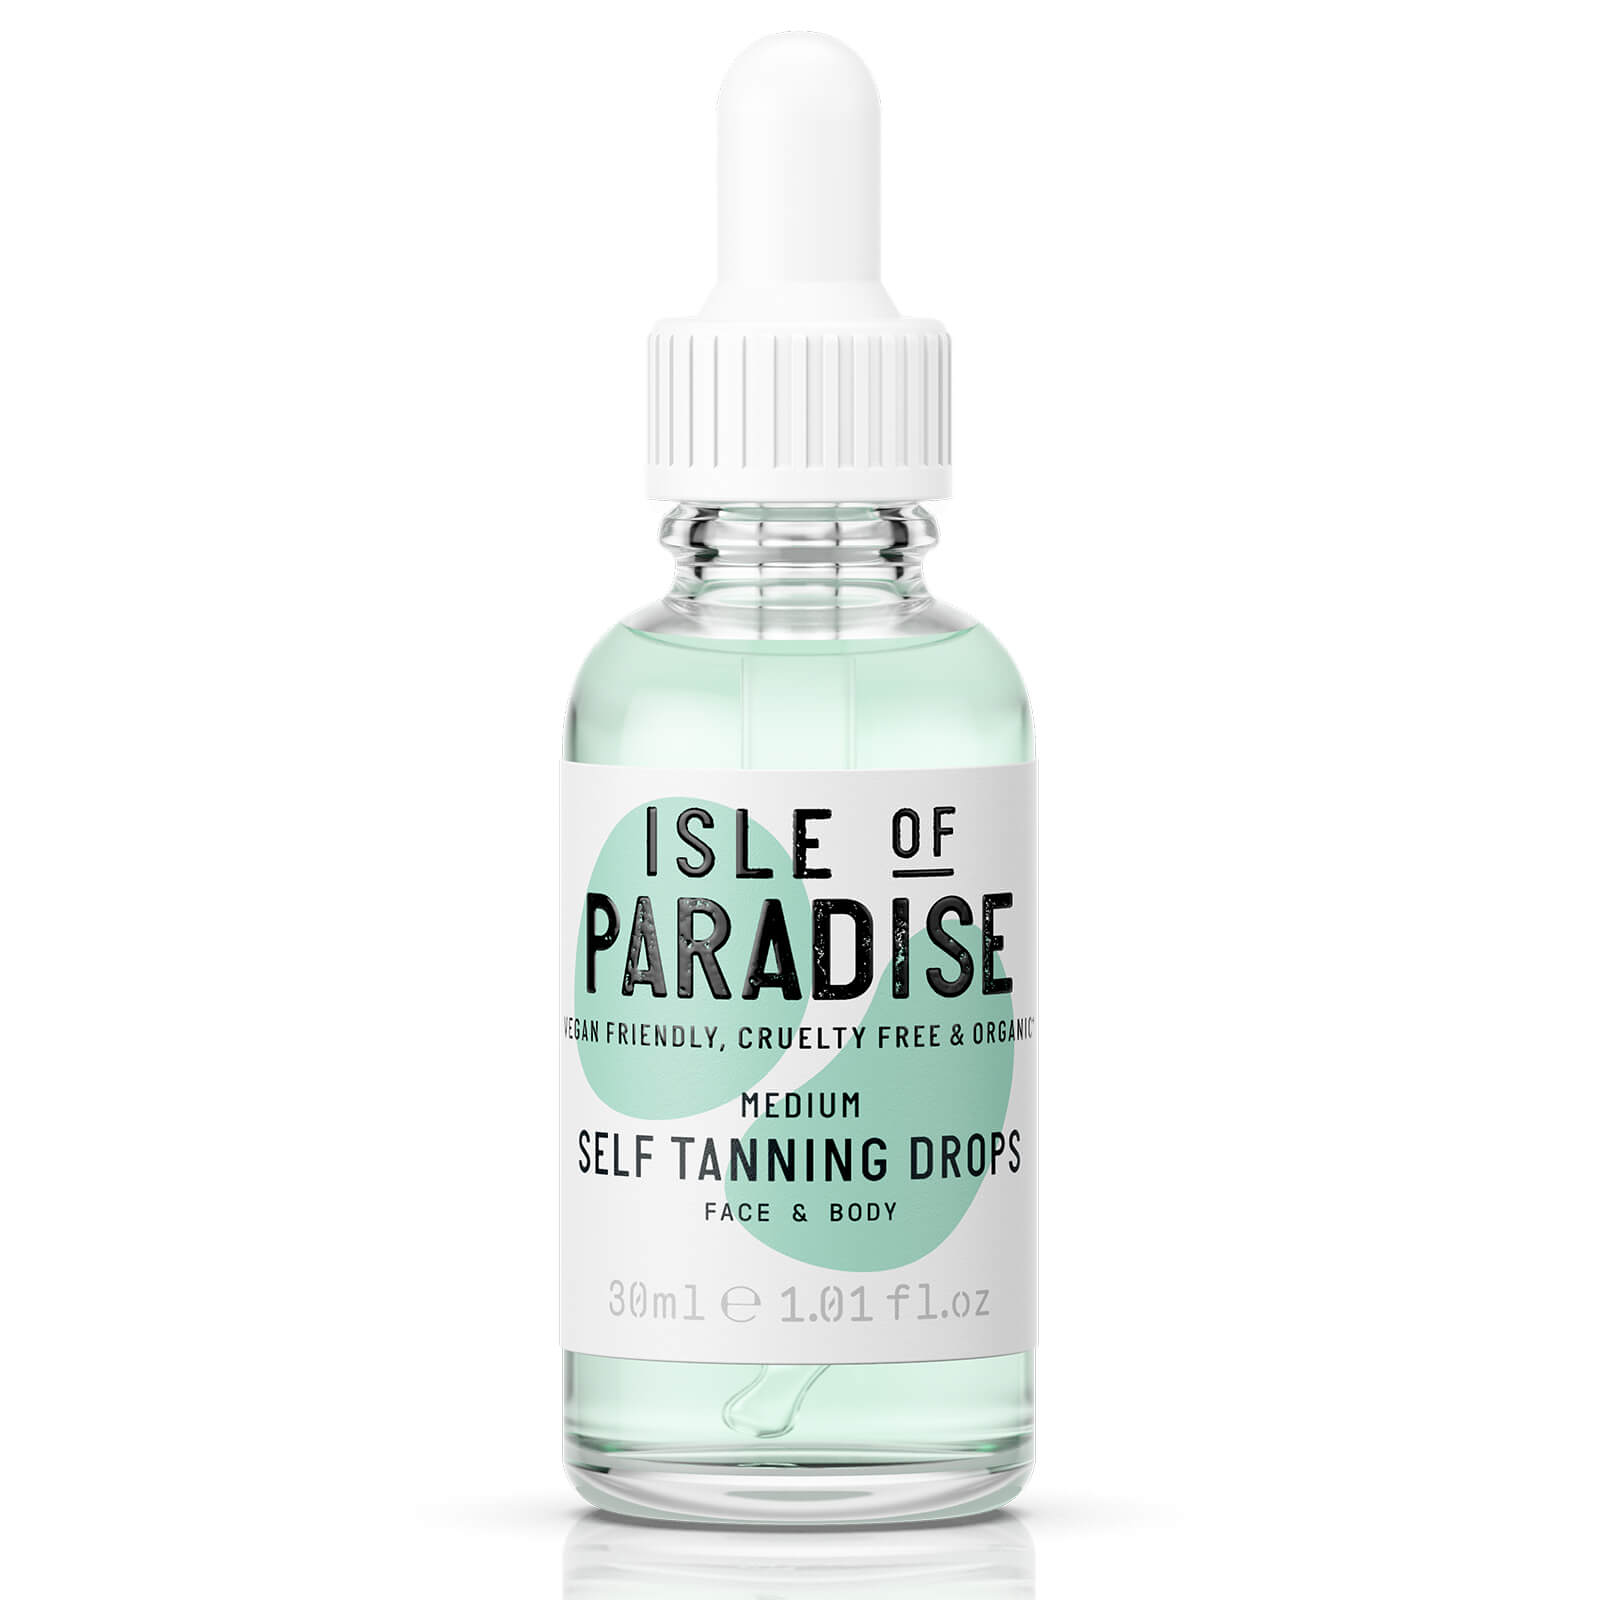 Isle of Paradise Self-Tanning Drops - Medium 30ml | Free Shipping ...